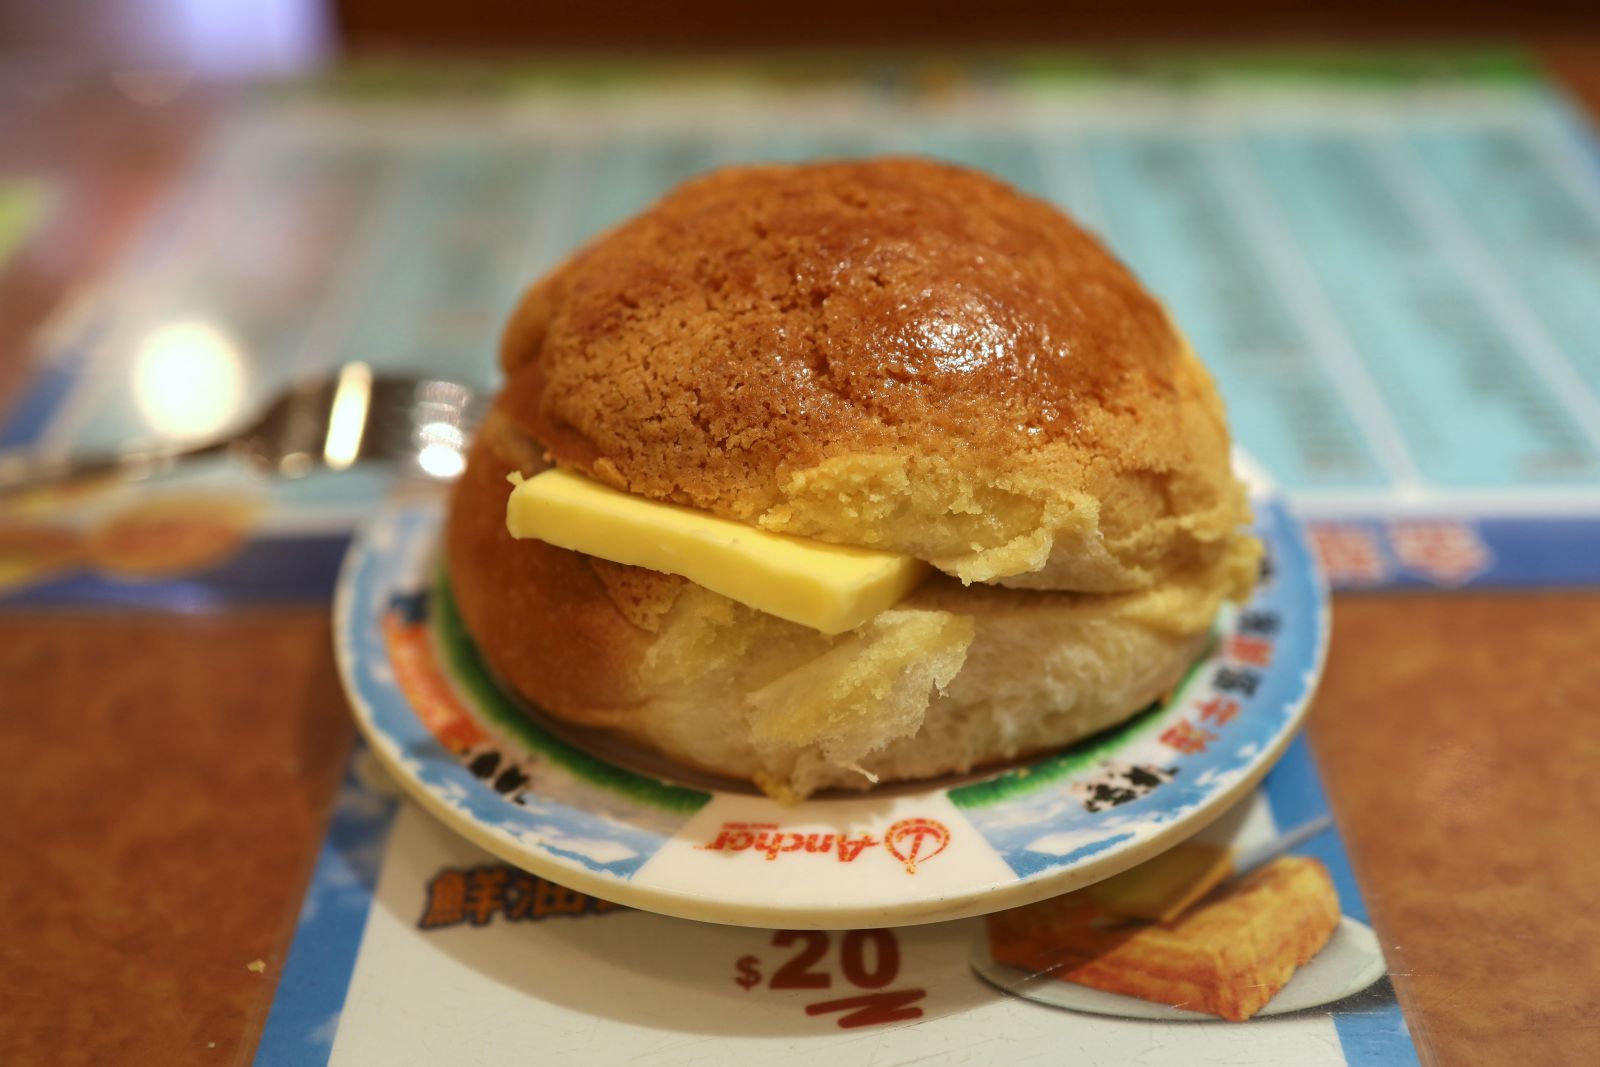 Pineapple bun with butter (菠蘿油)